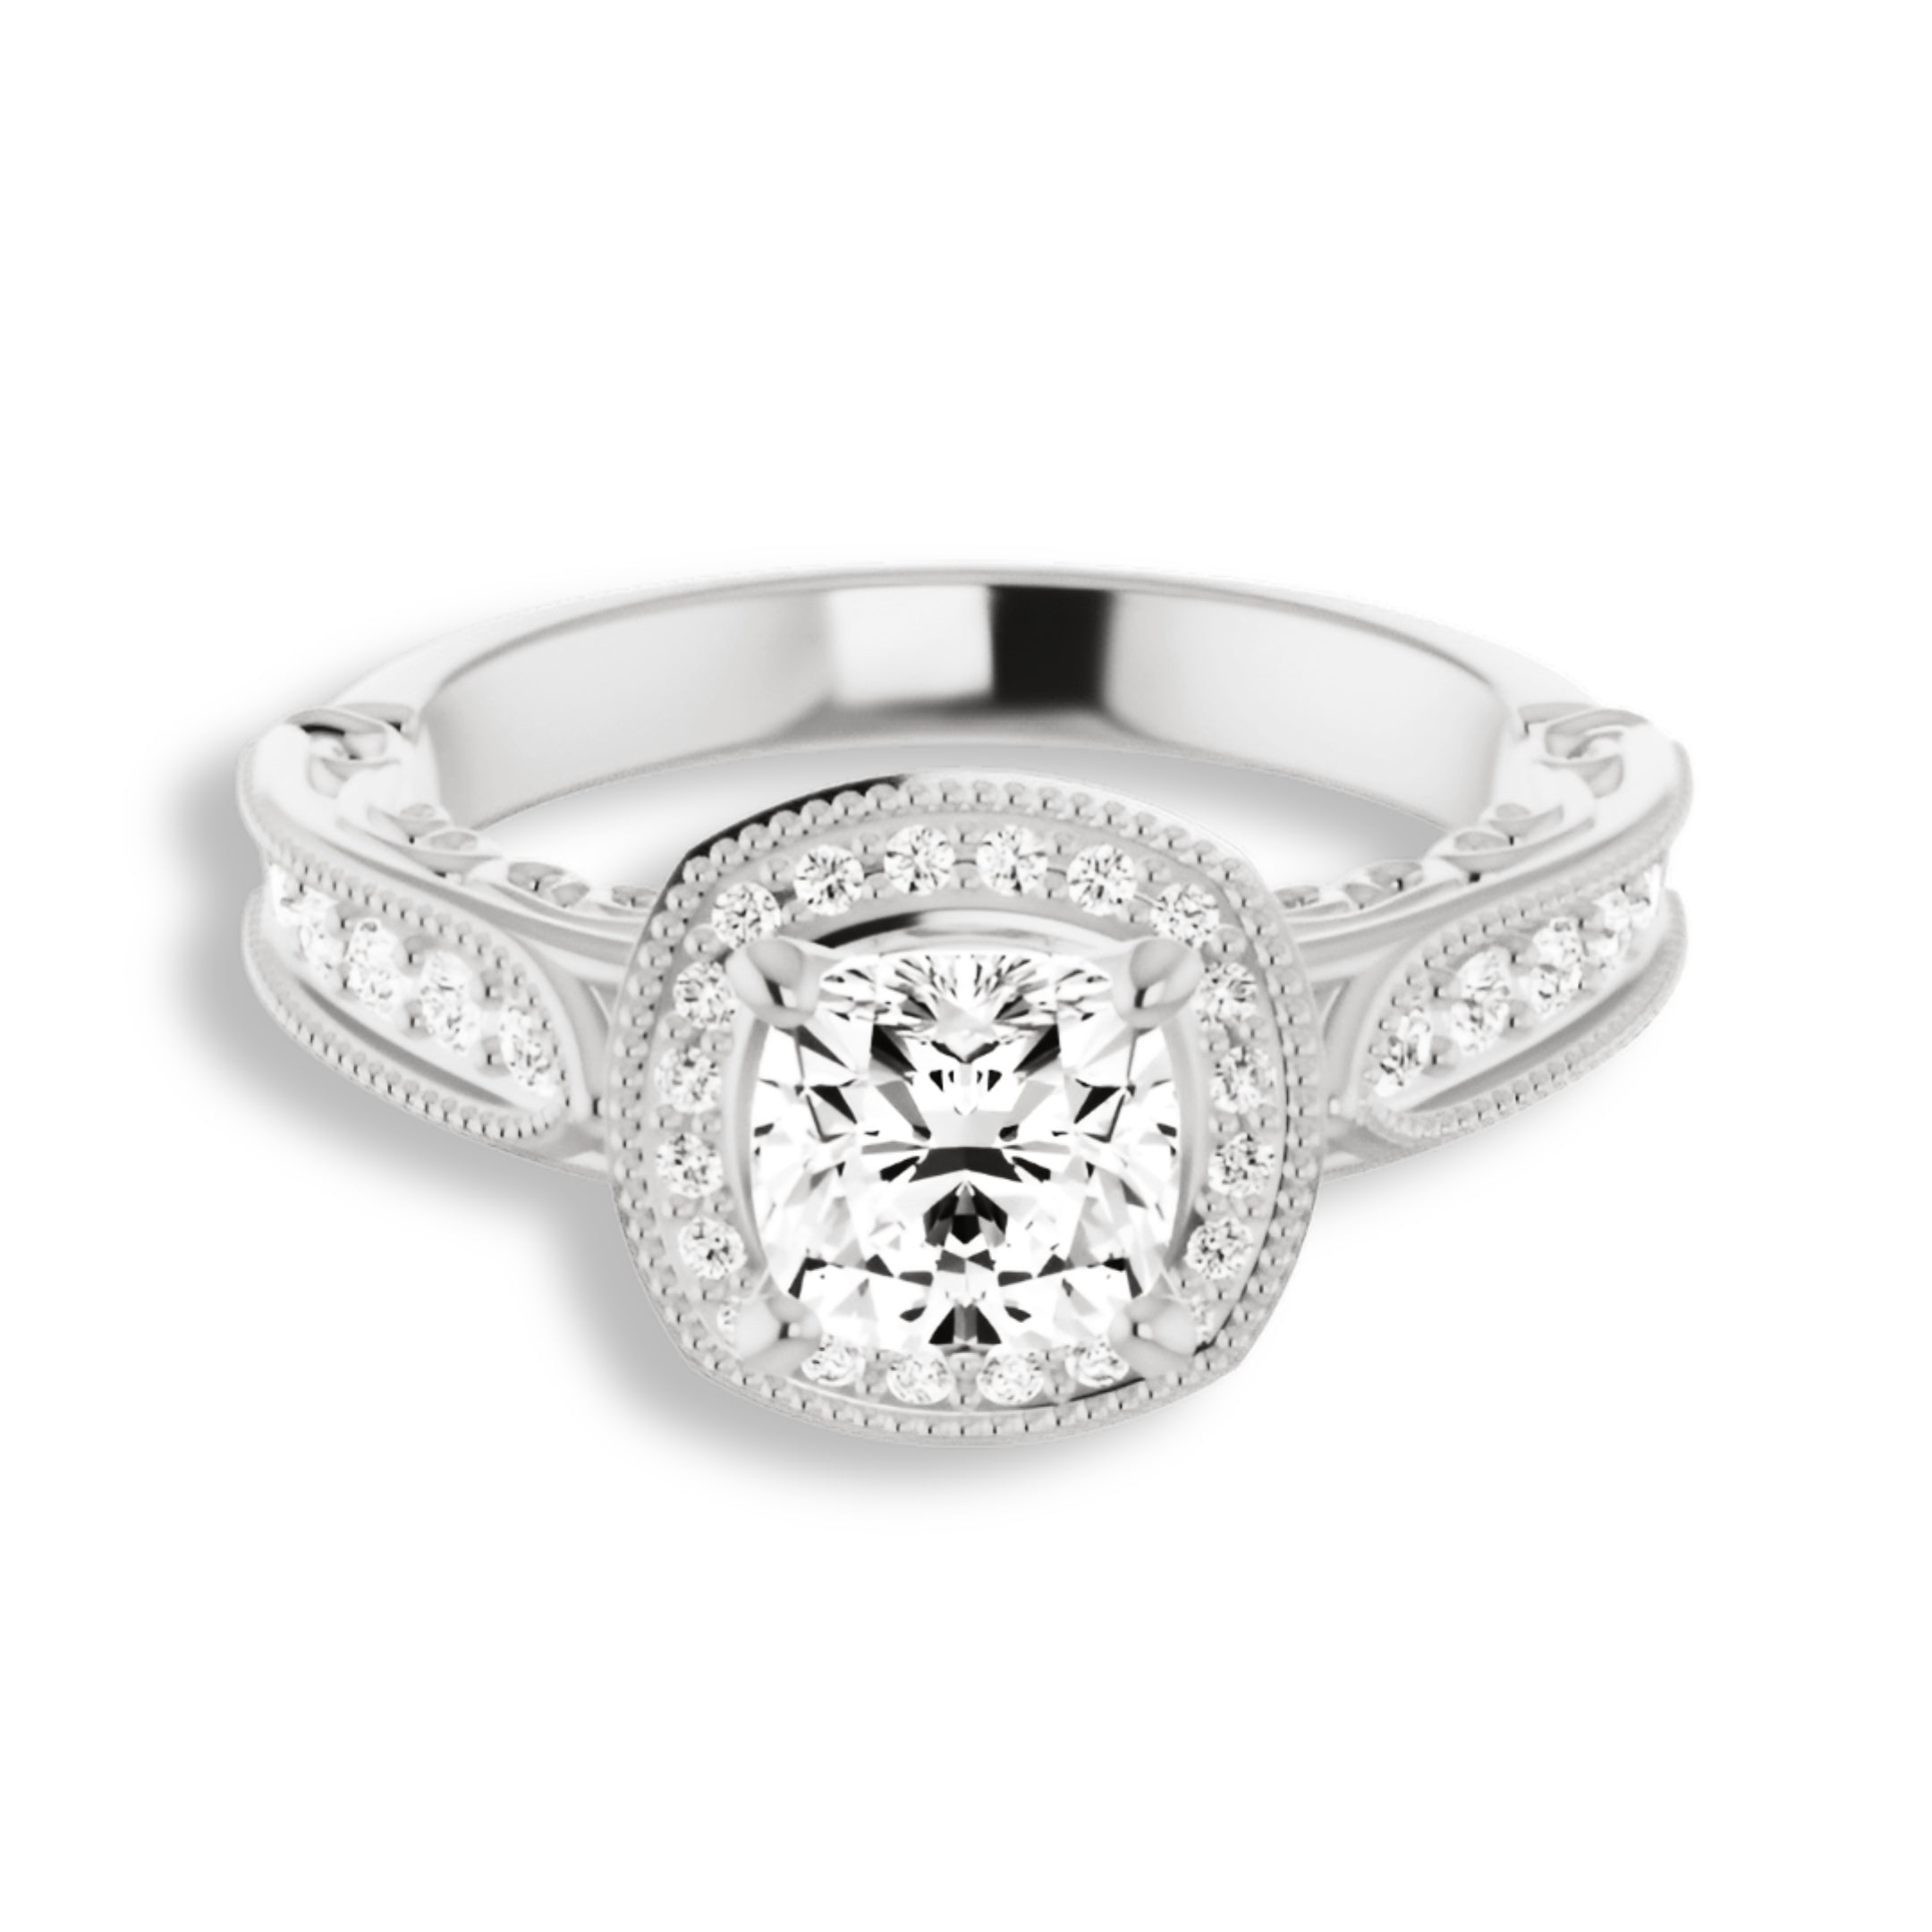 Vintage Style Cushion Cut Diamond Halo Engagement Ring